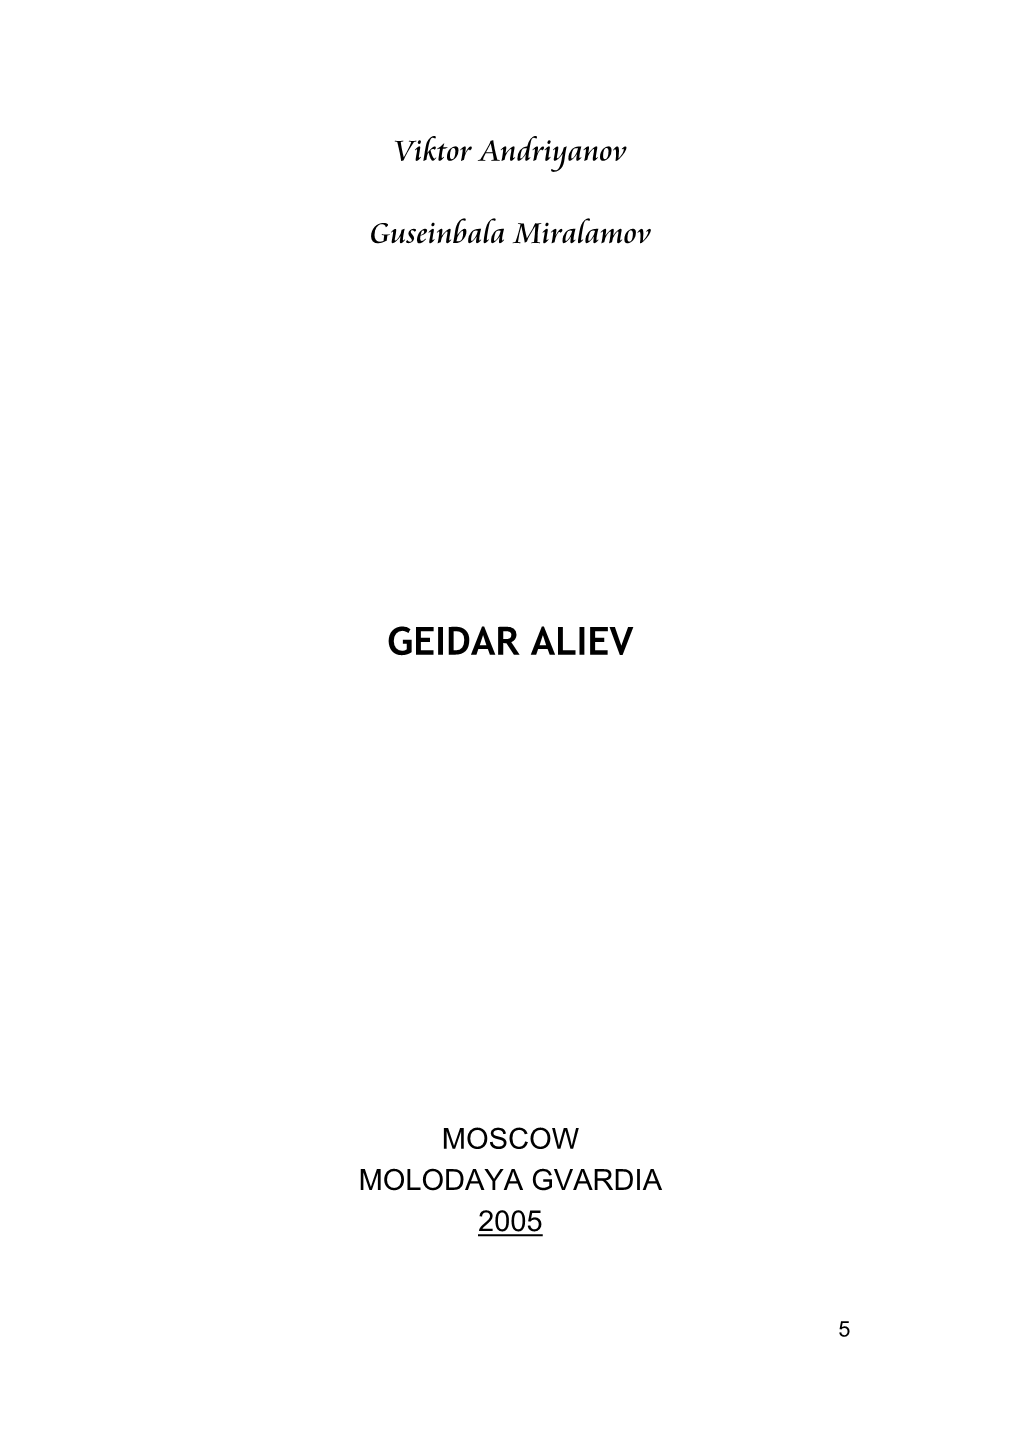 Geidar Aliev